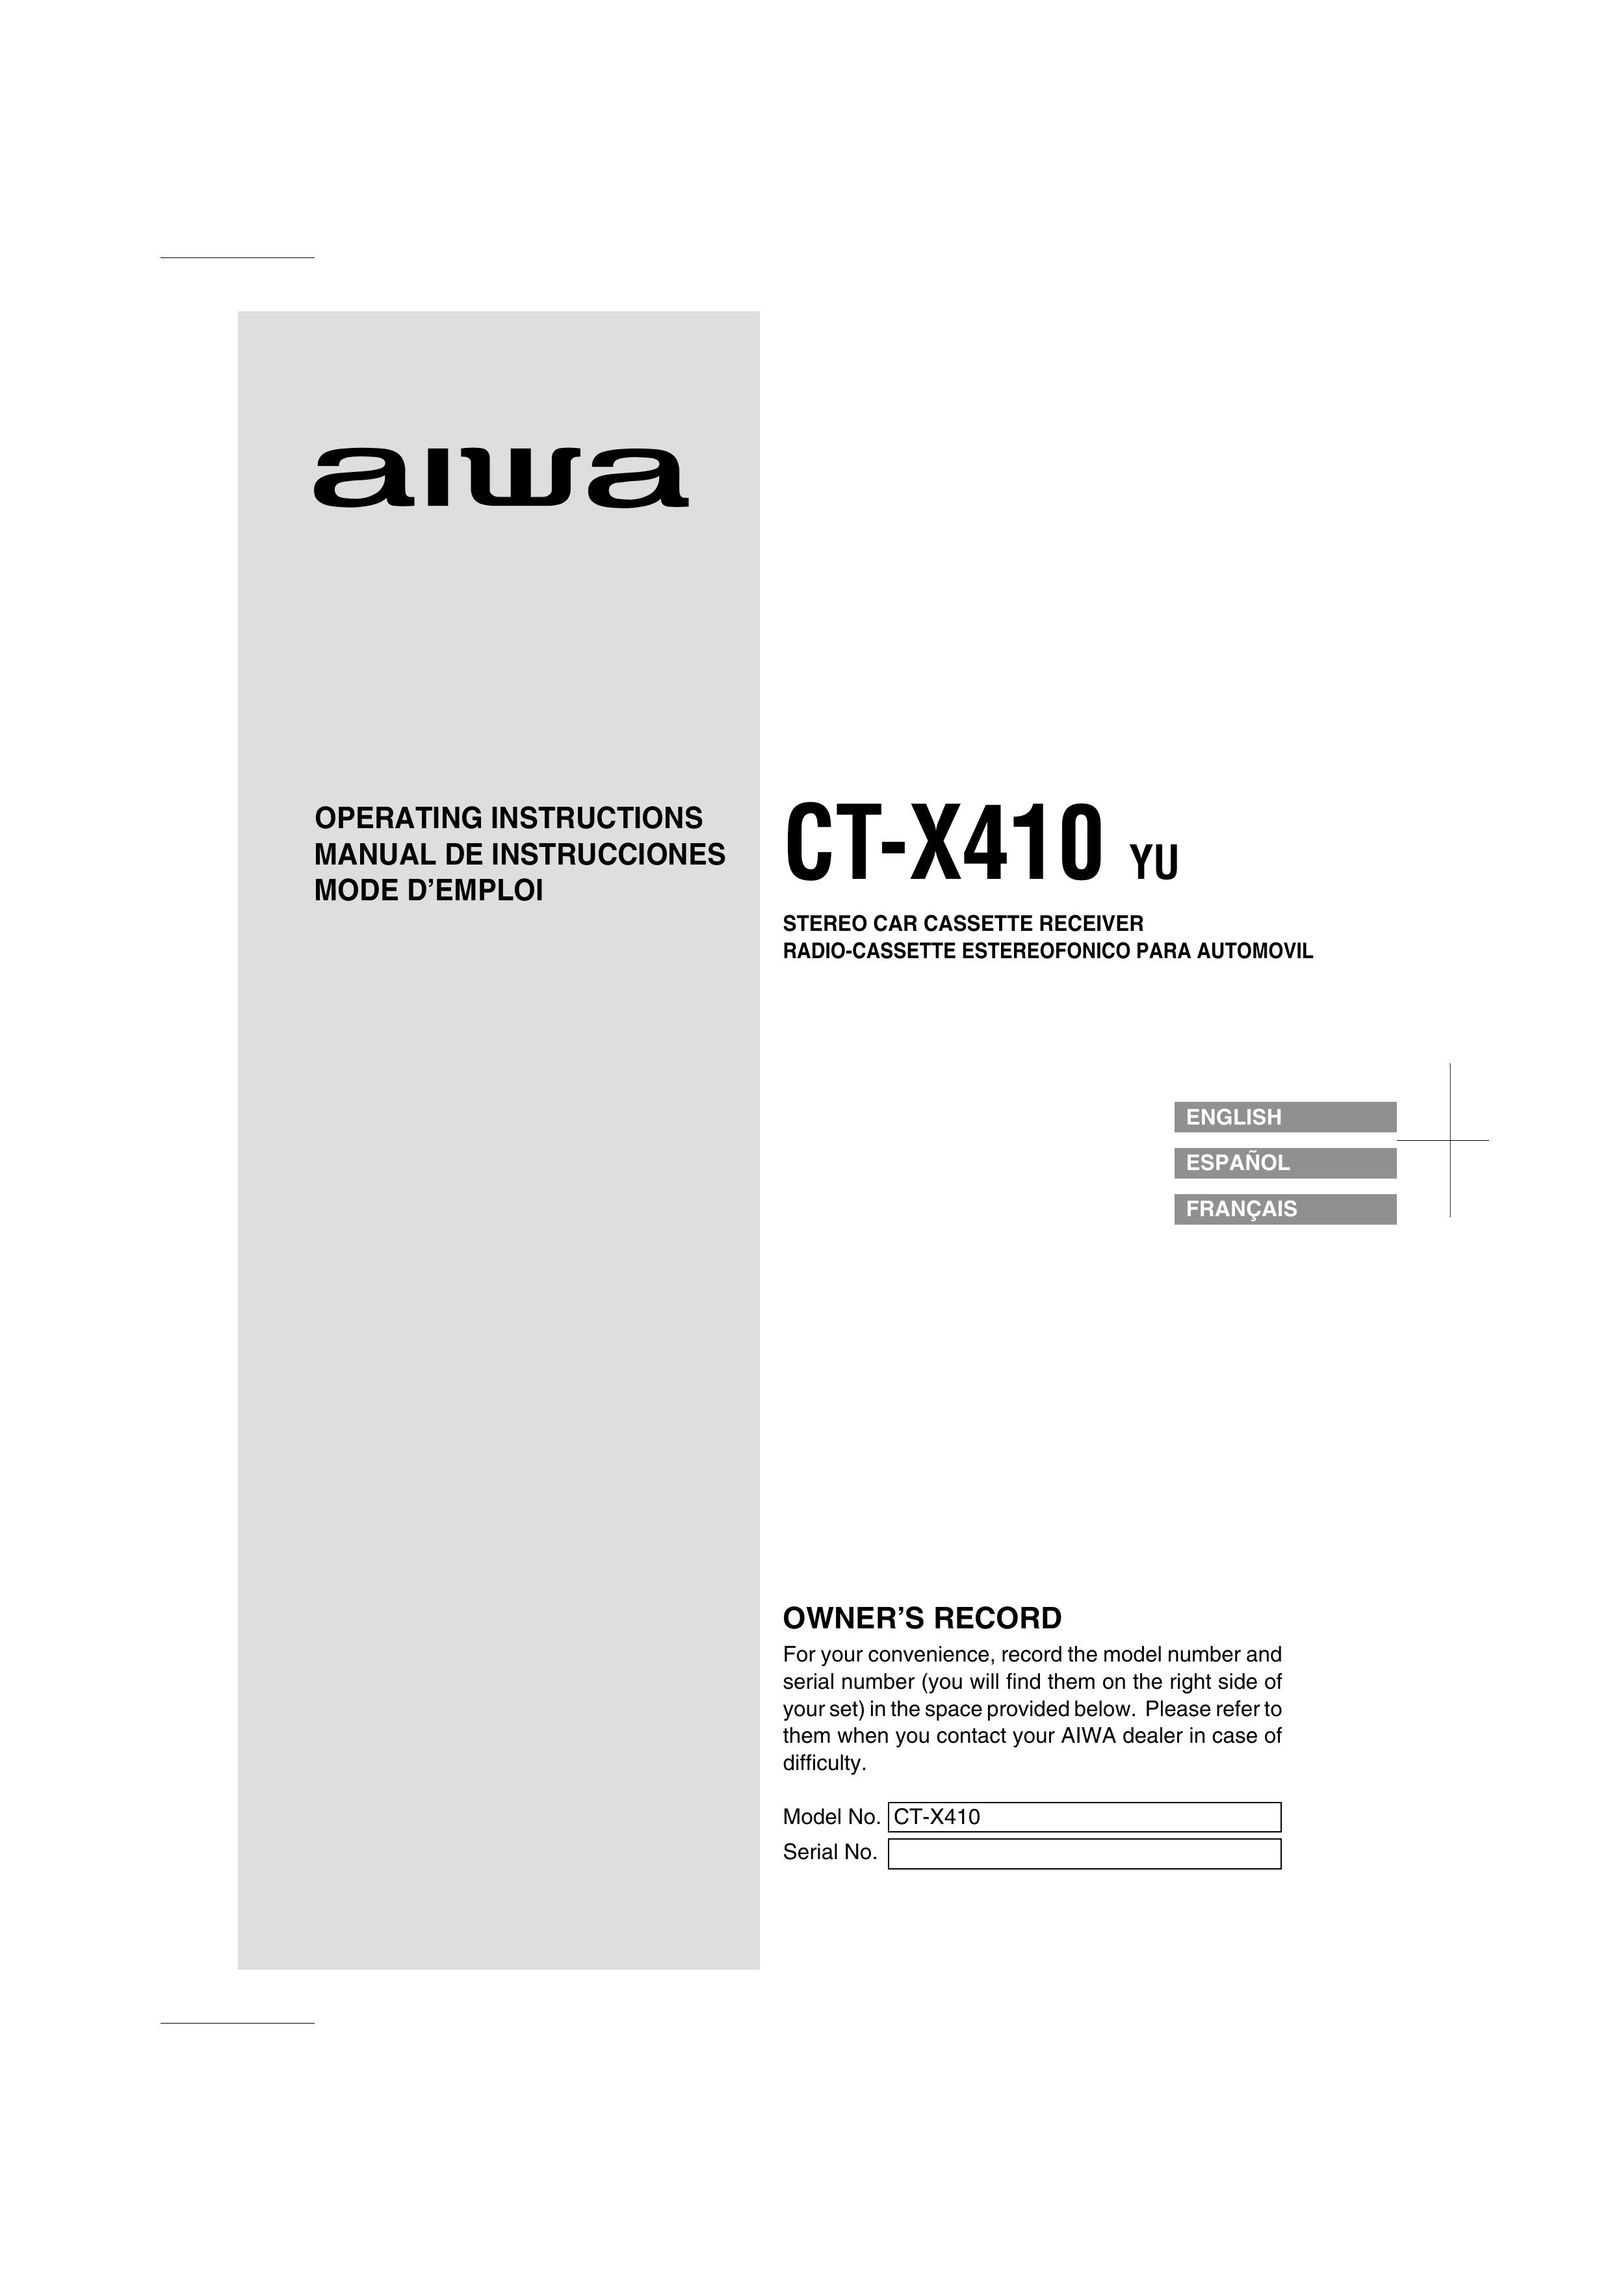 Aiwa CT-X410 YU Car Stereo System User Manual